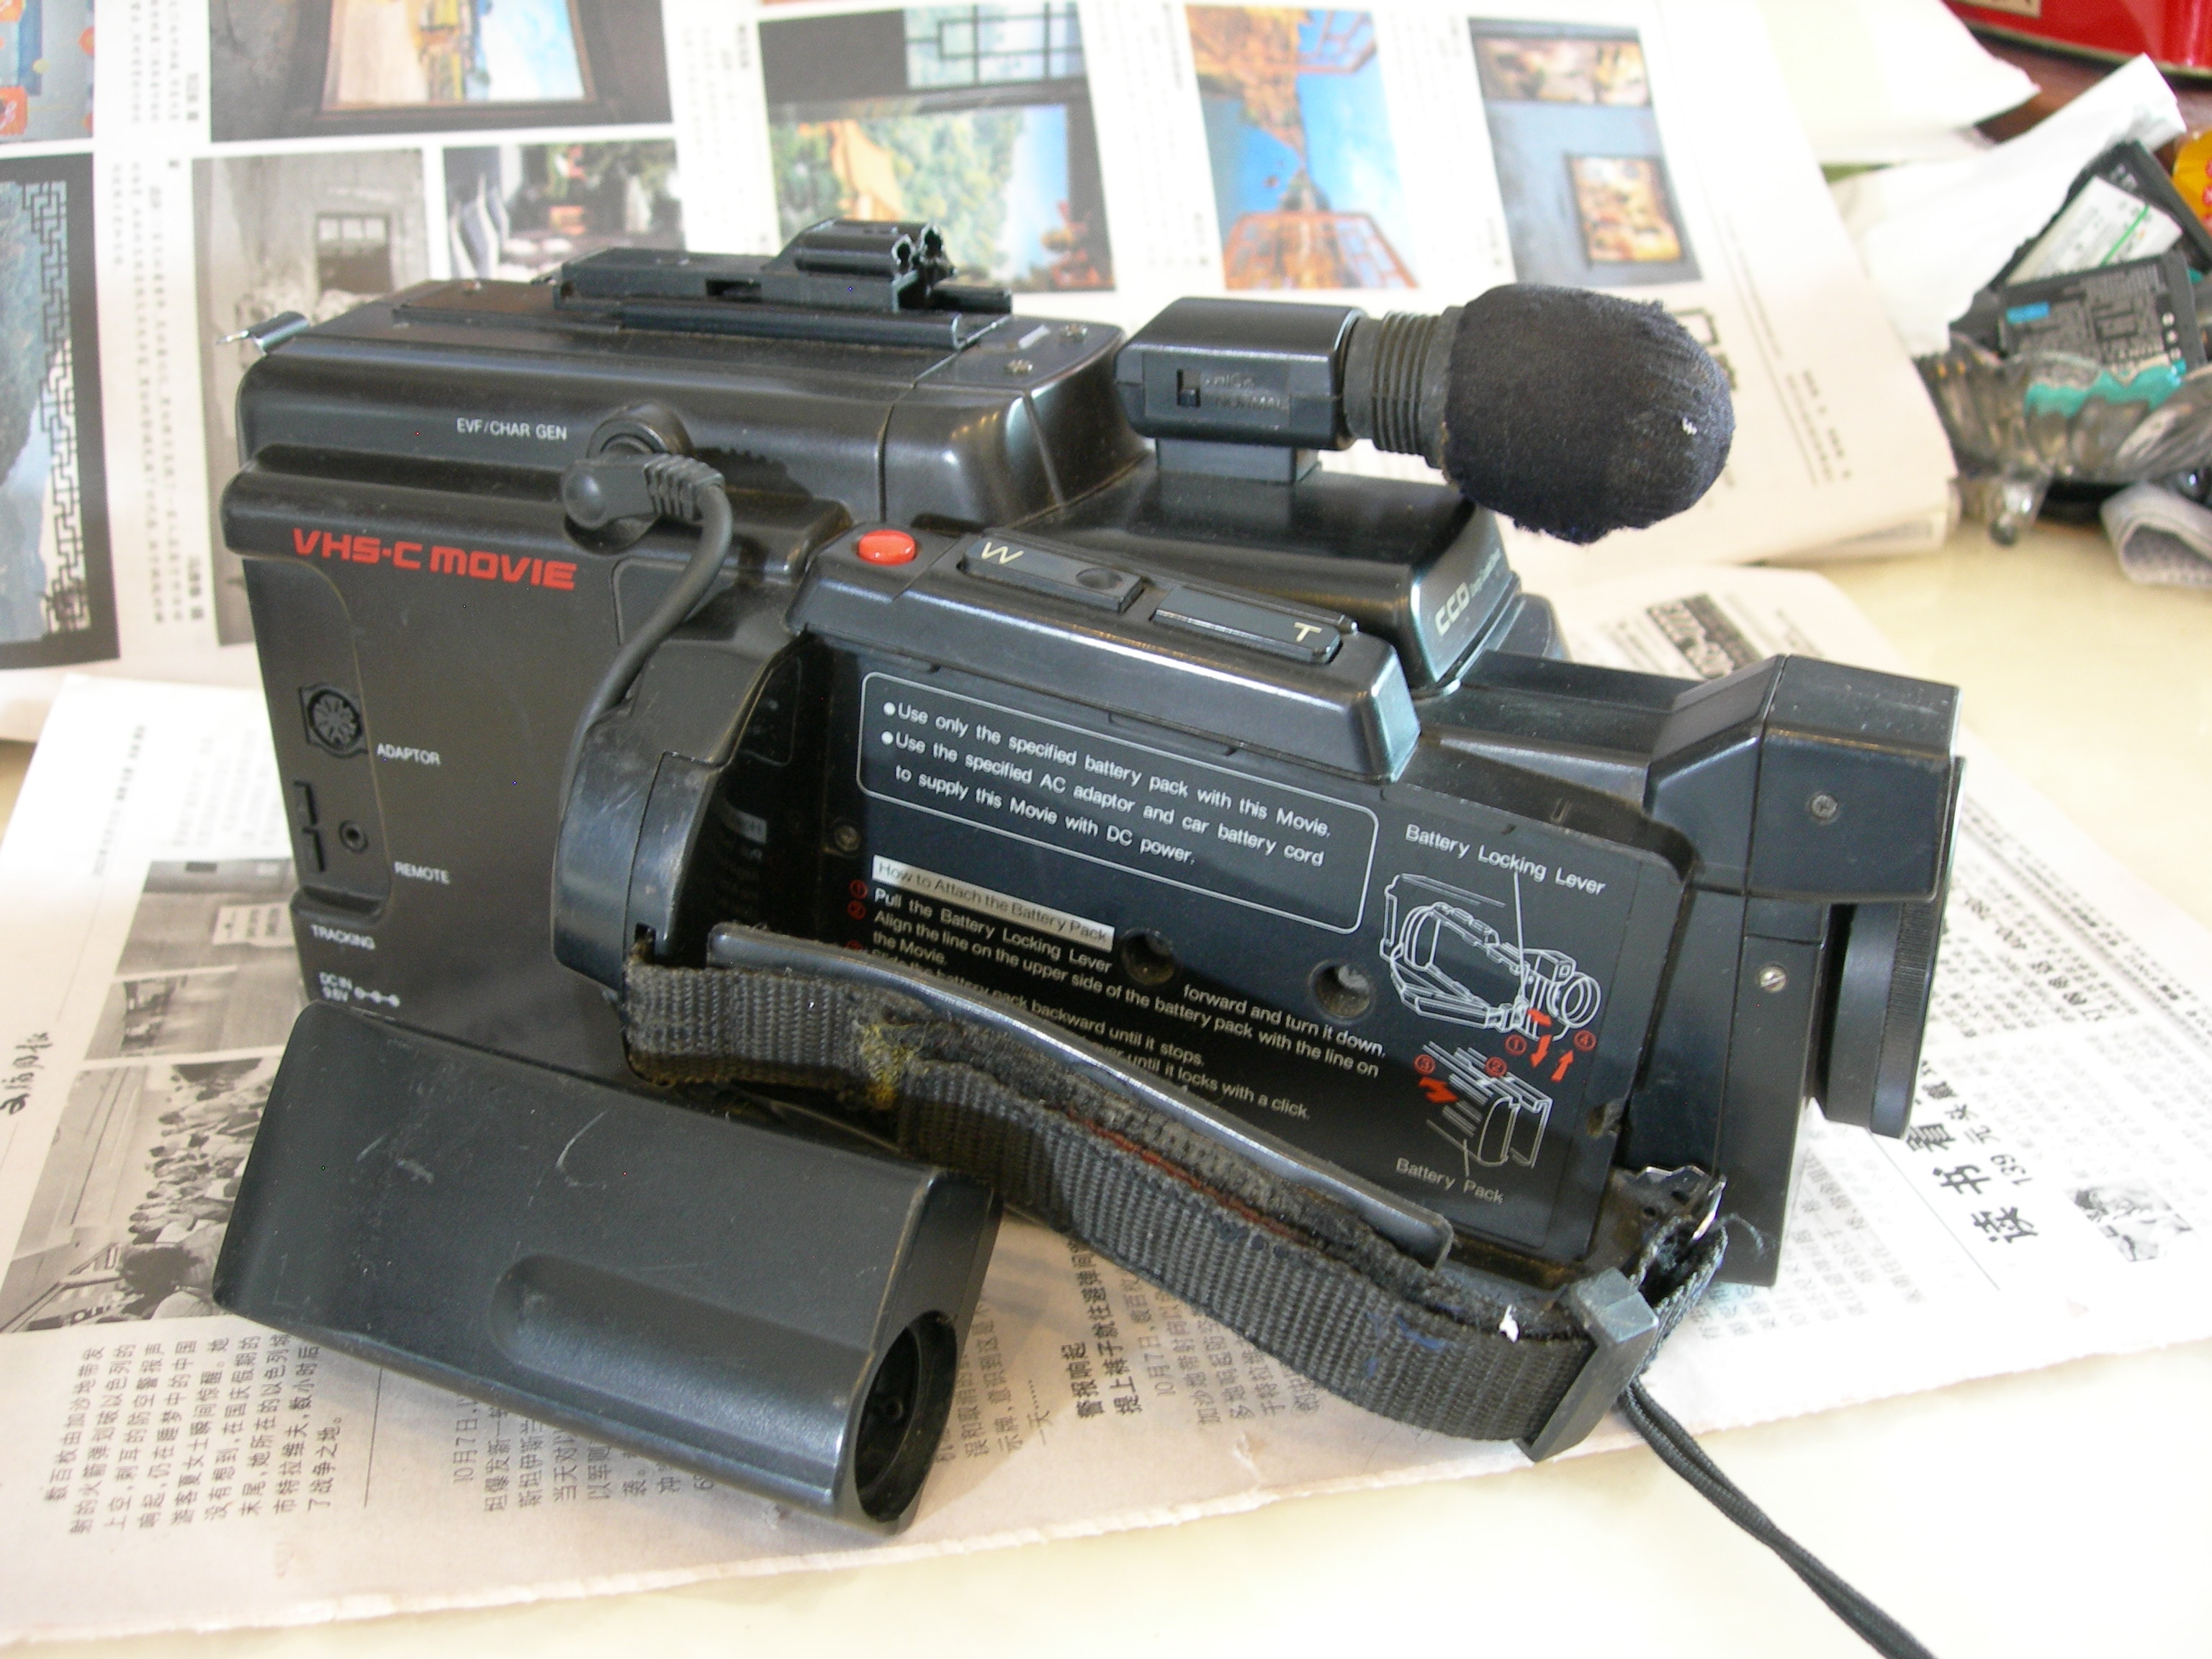  Panasonic MC10 camera